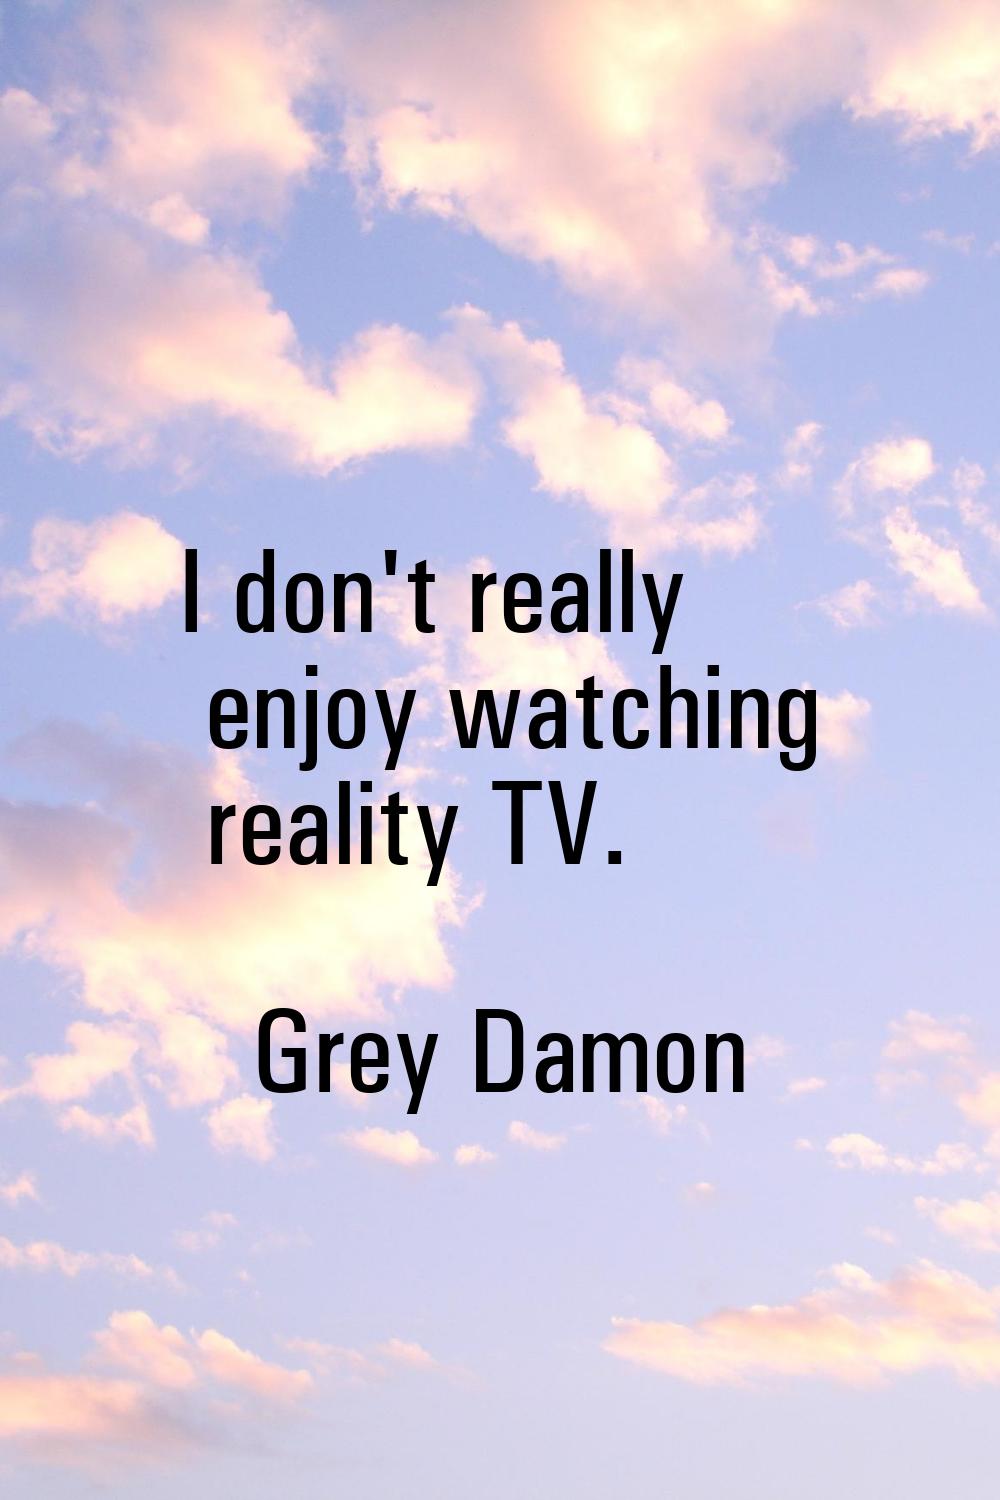 I don't really enjoy watching reality TV.